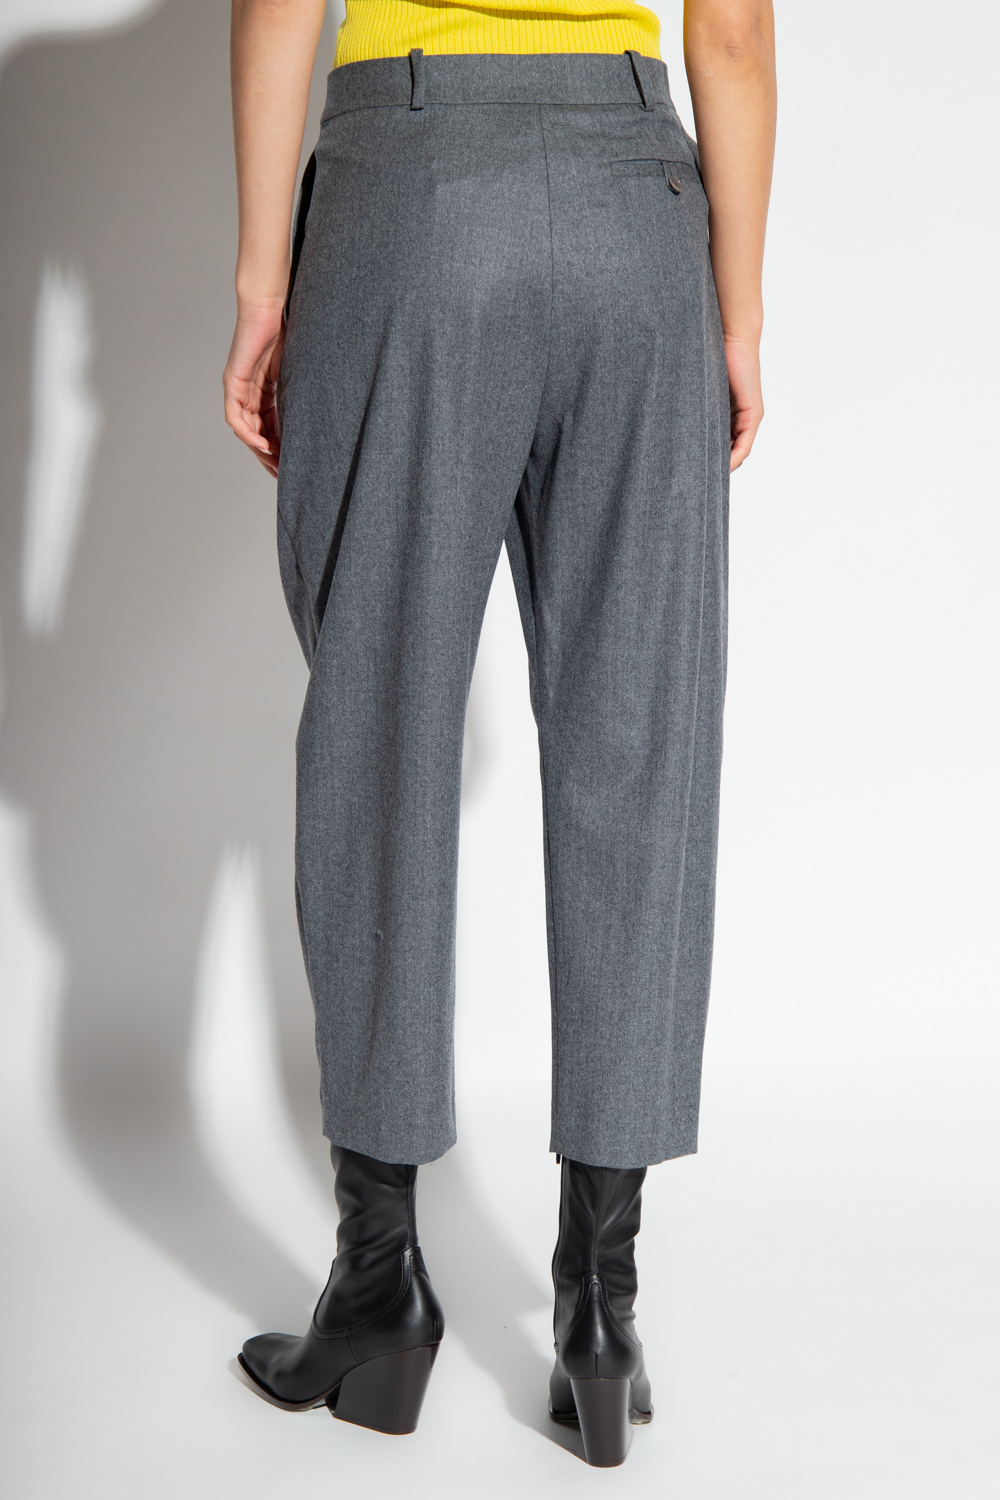 Stella McCartney Wool trousers